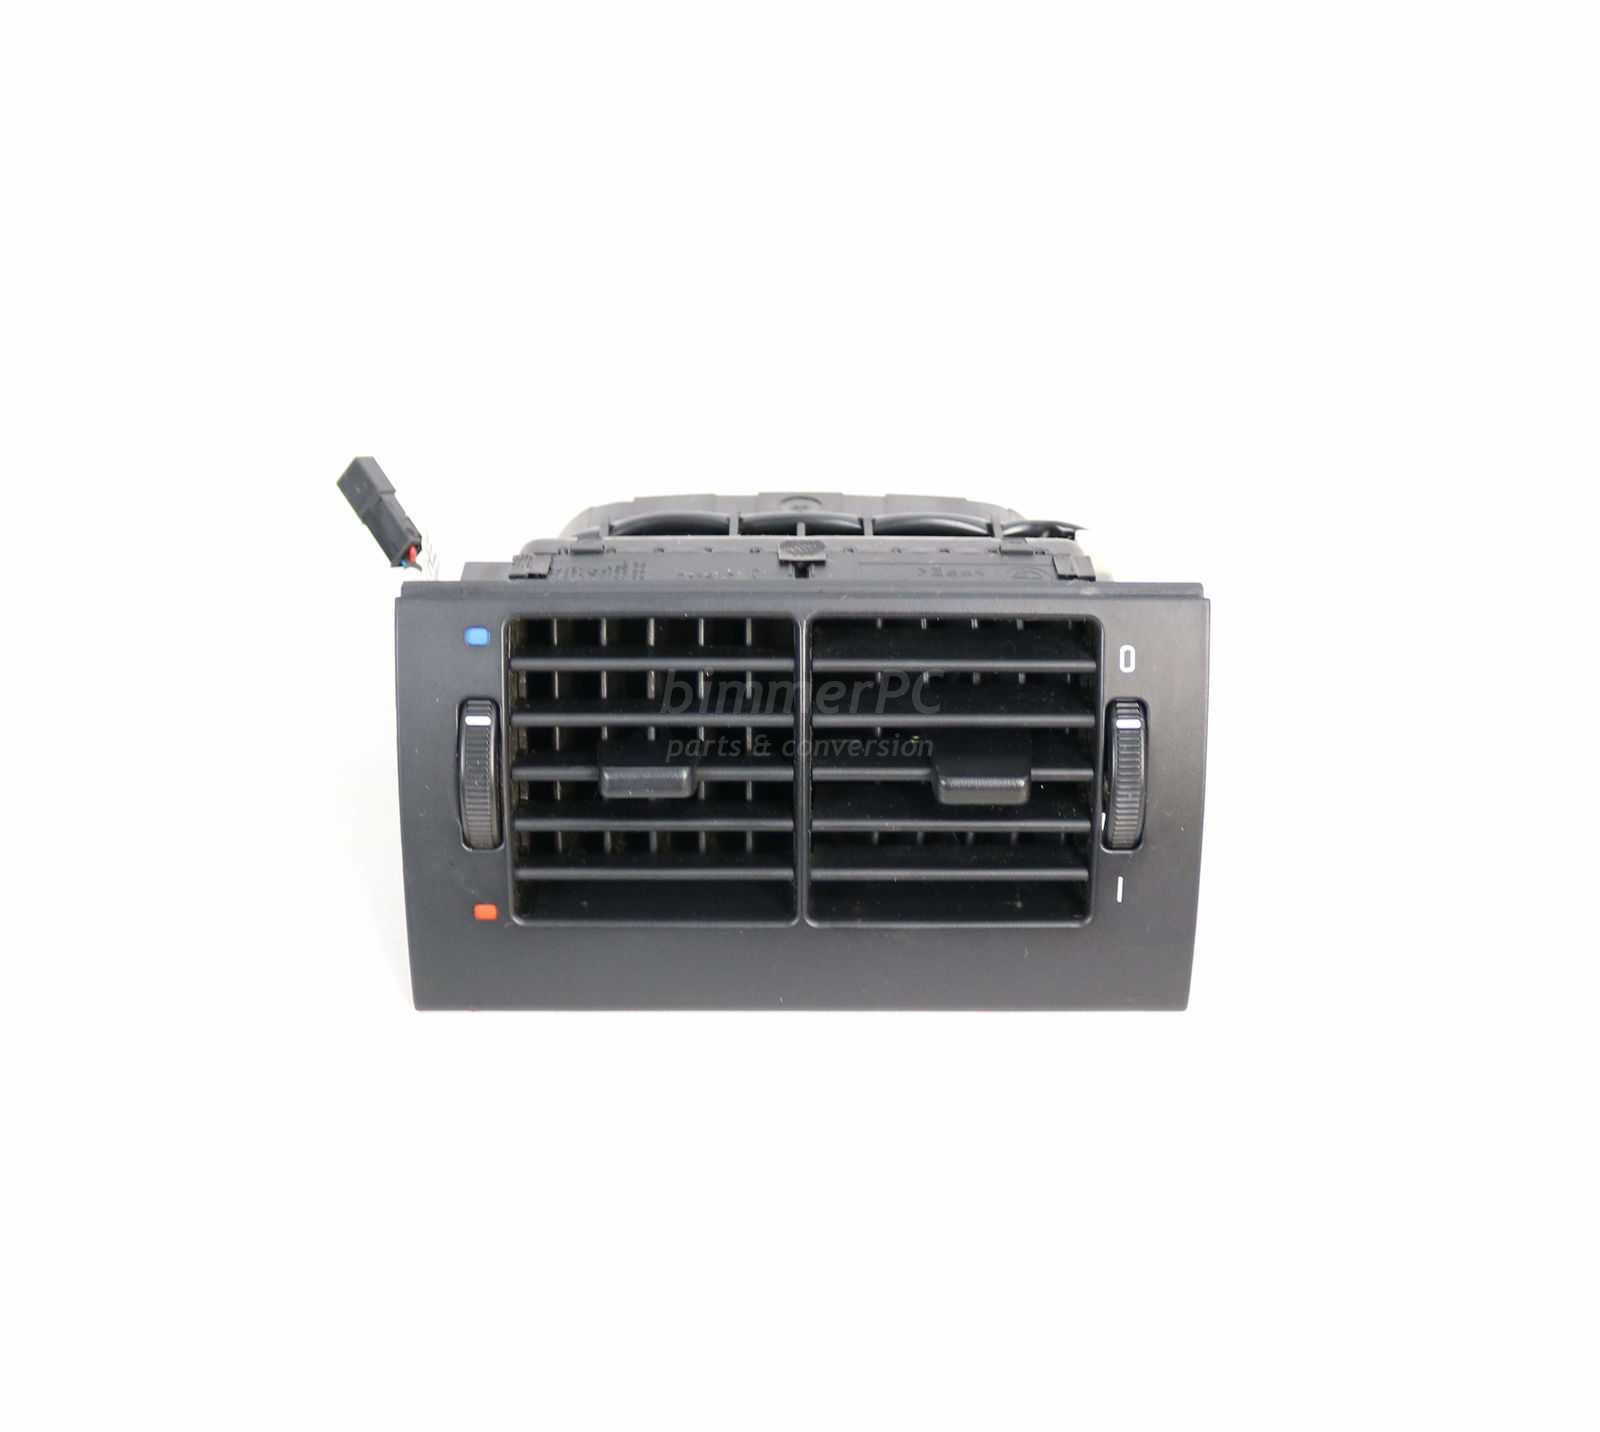 Bmw E39 5 Series Rear Center Console Air Vent Hot Cold Control 1998